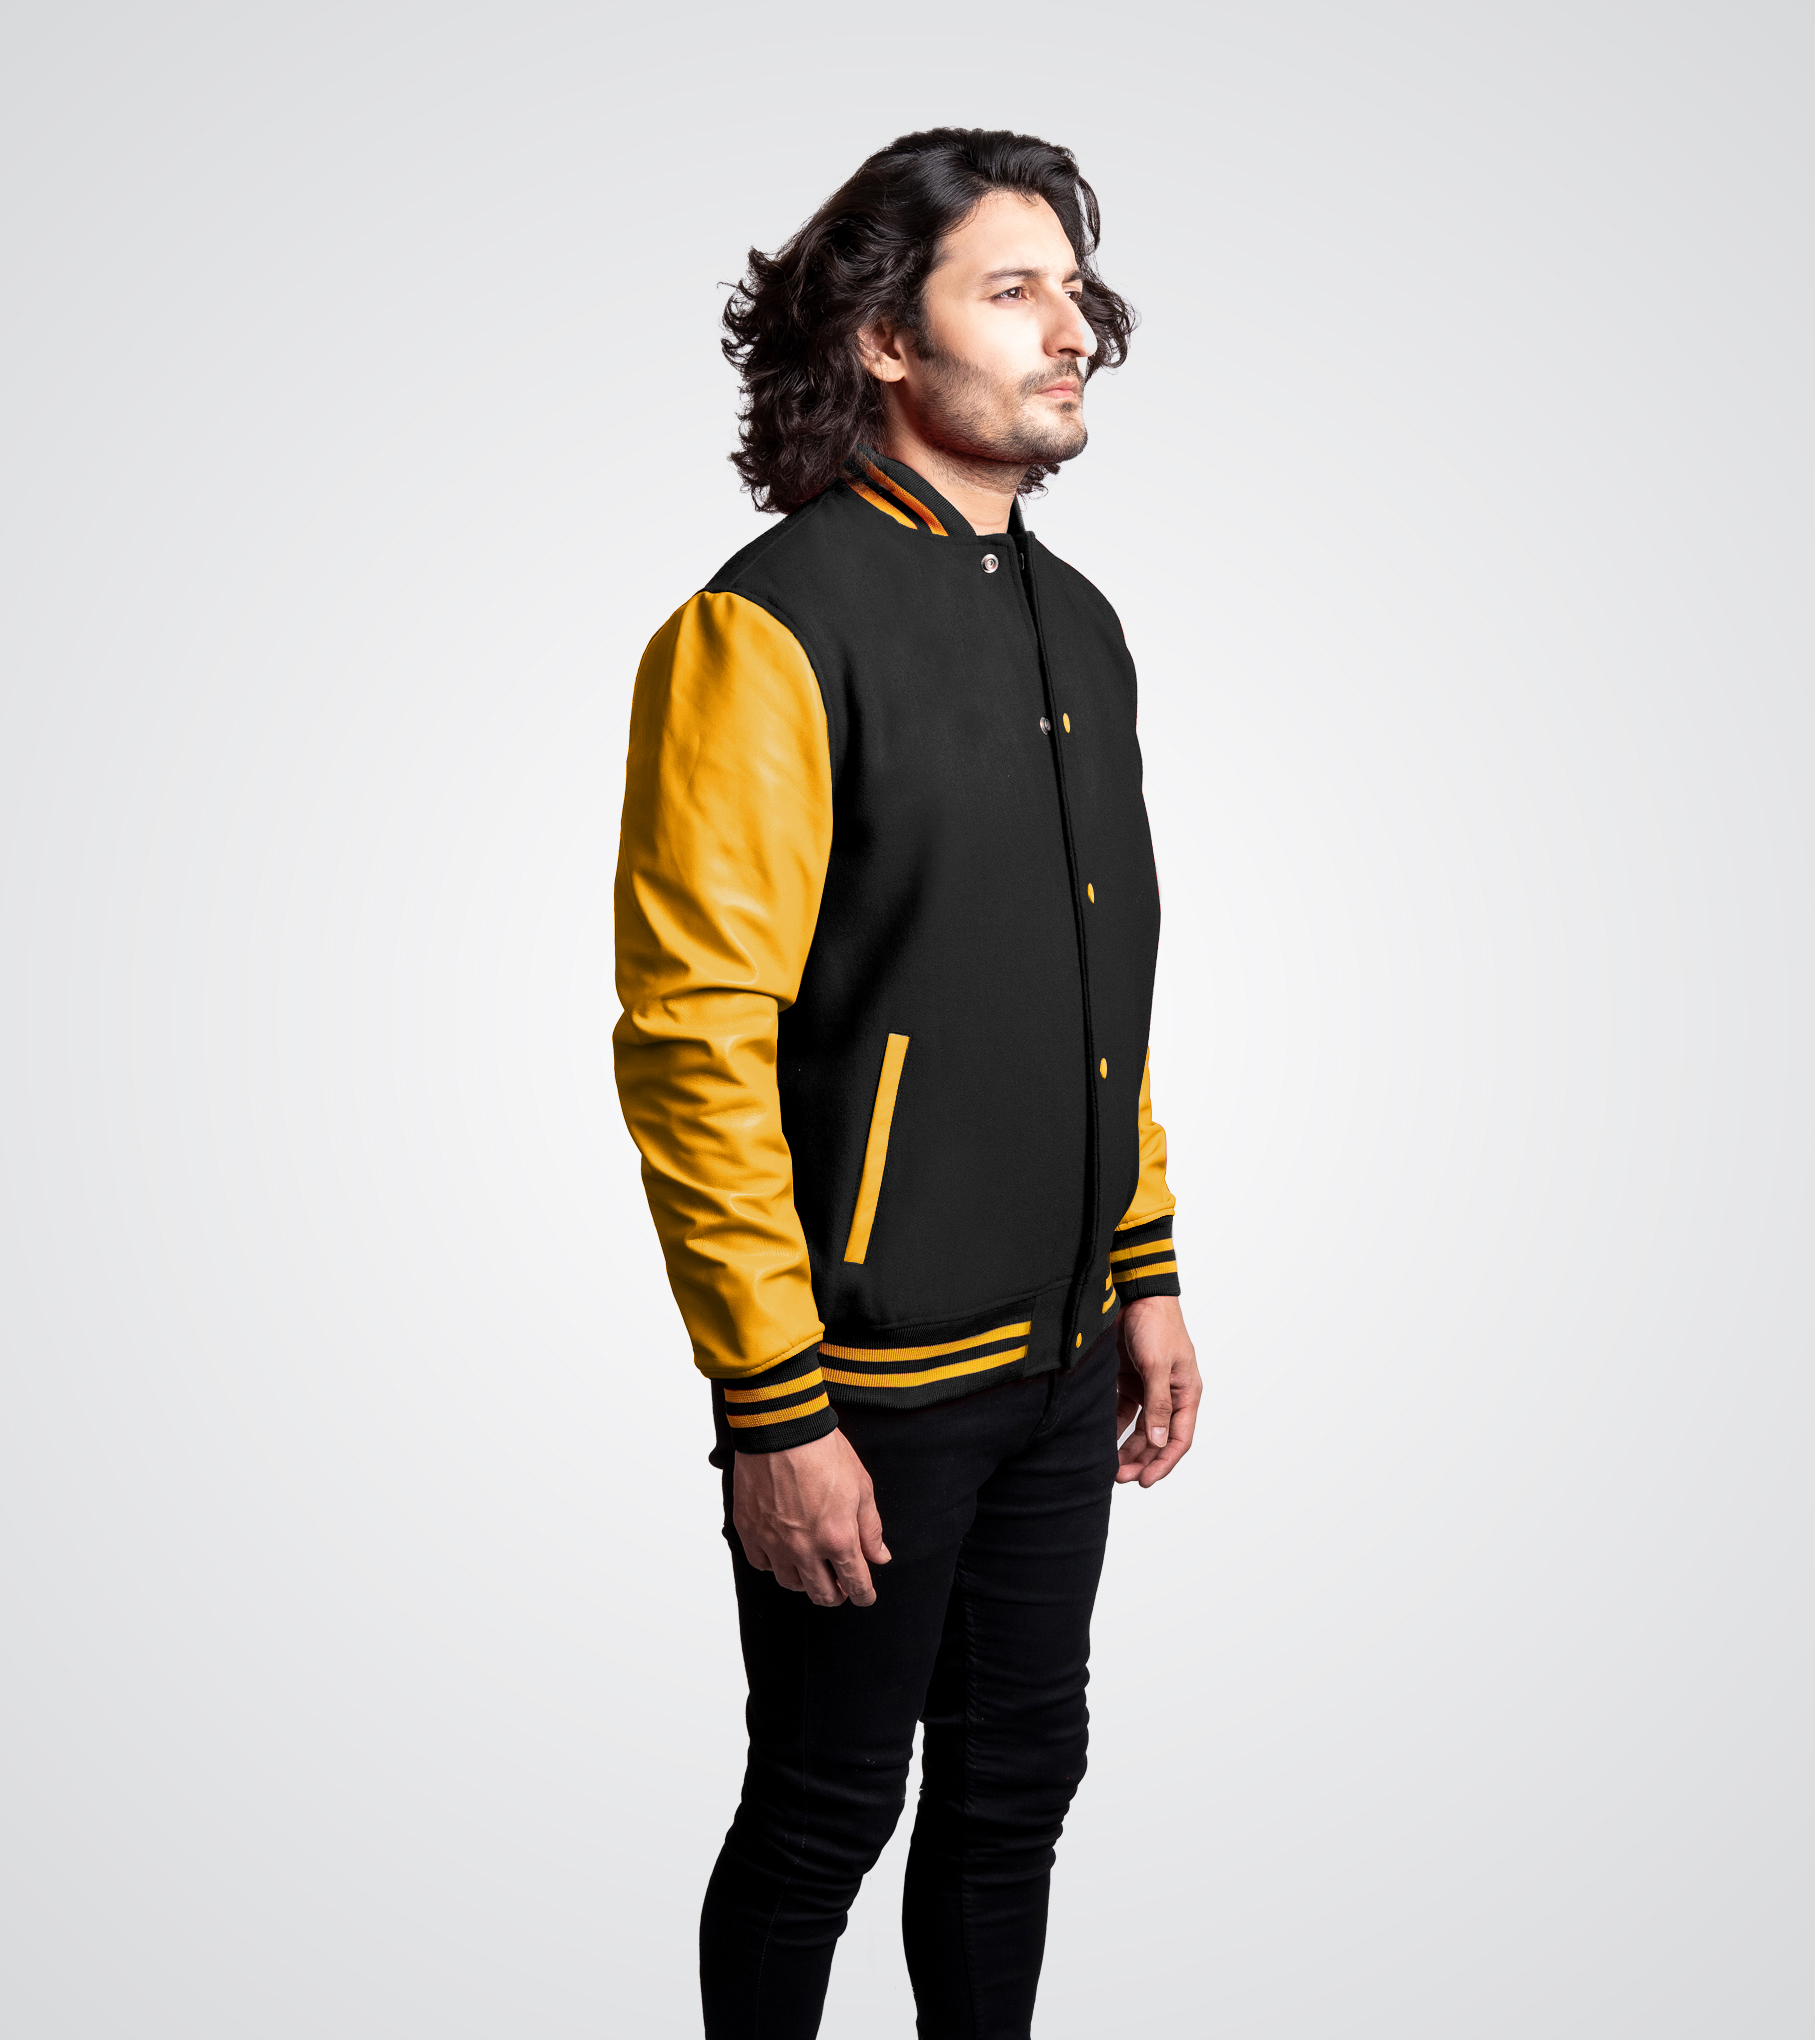 Black wool body and Athletic Gold leather sleeves Varsity Jacket